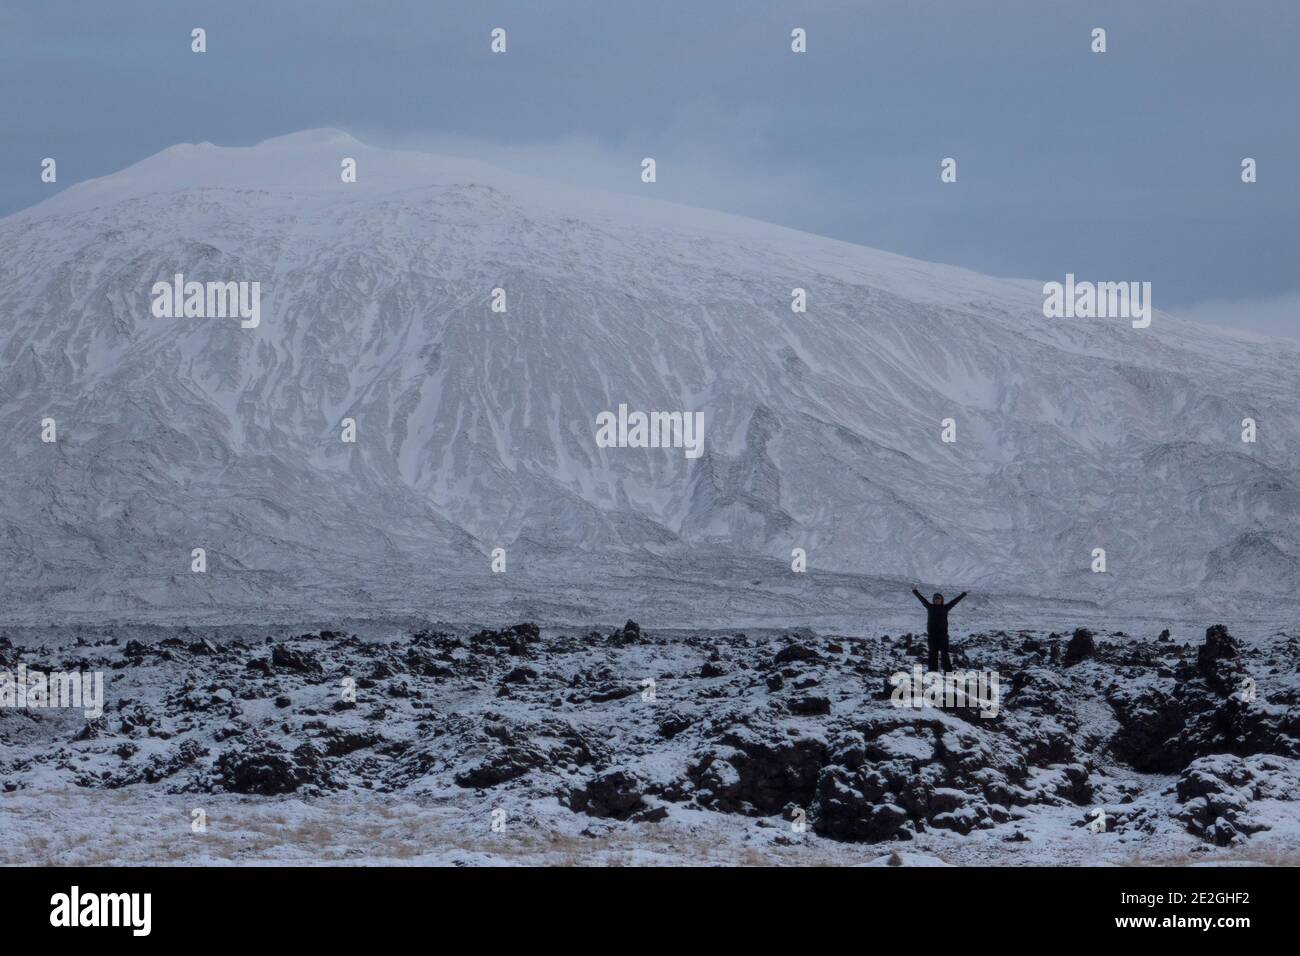 Überschwängliche Frau in abgelegenen verschneiten Berglandschaft, Sn fellsj kull, Island Stockfoto